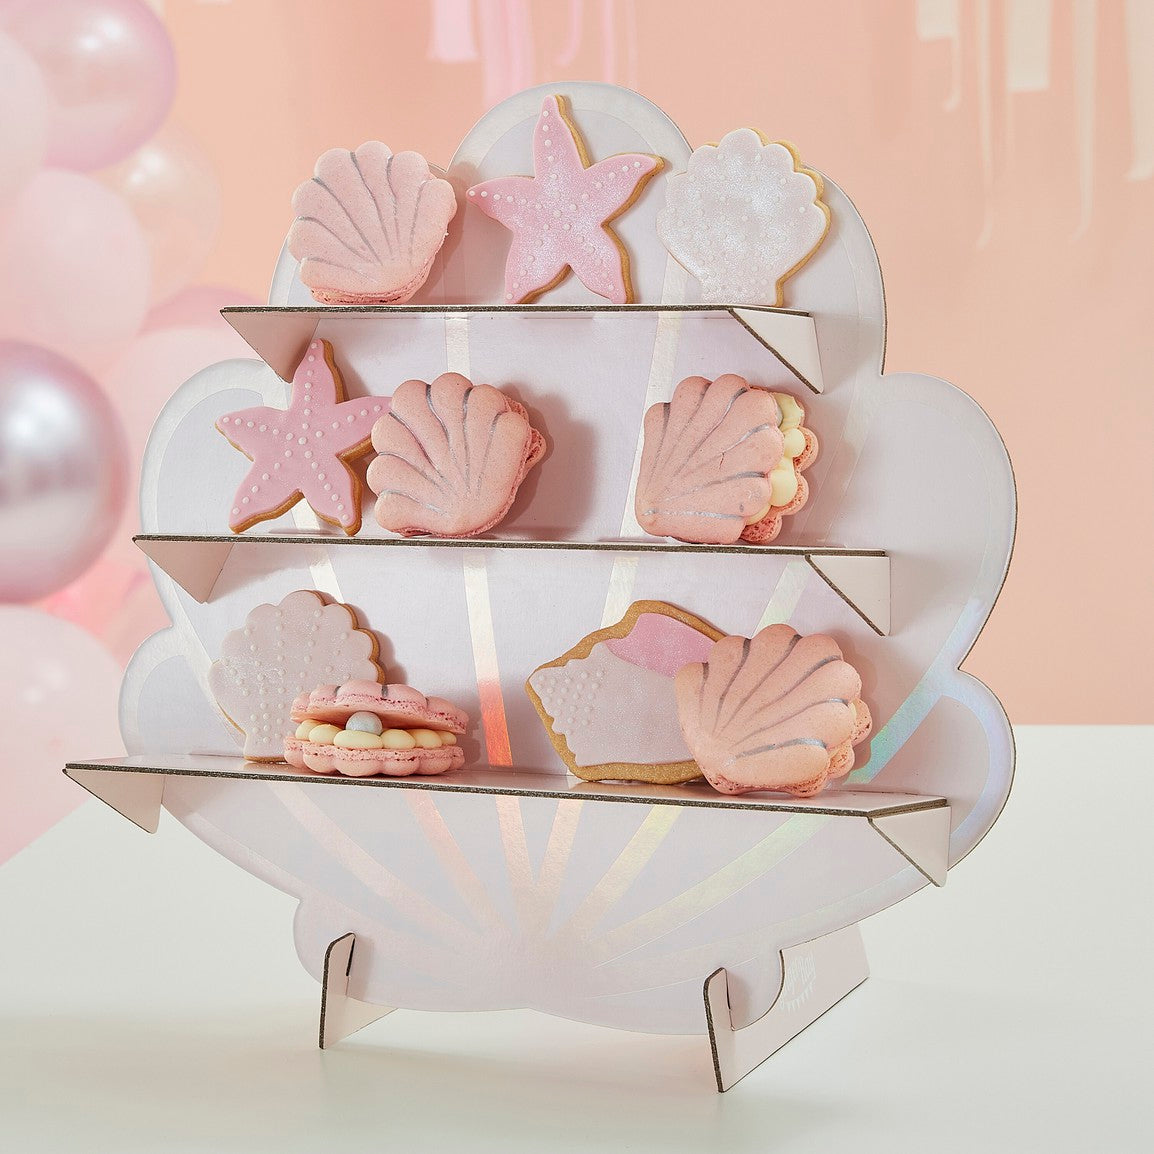 Pink & Iridescent Mermaid Shells Shaped Treat Stand 480x480 resolution